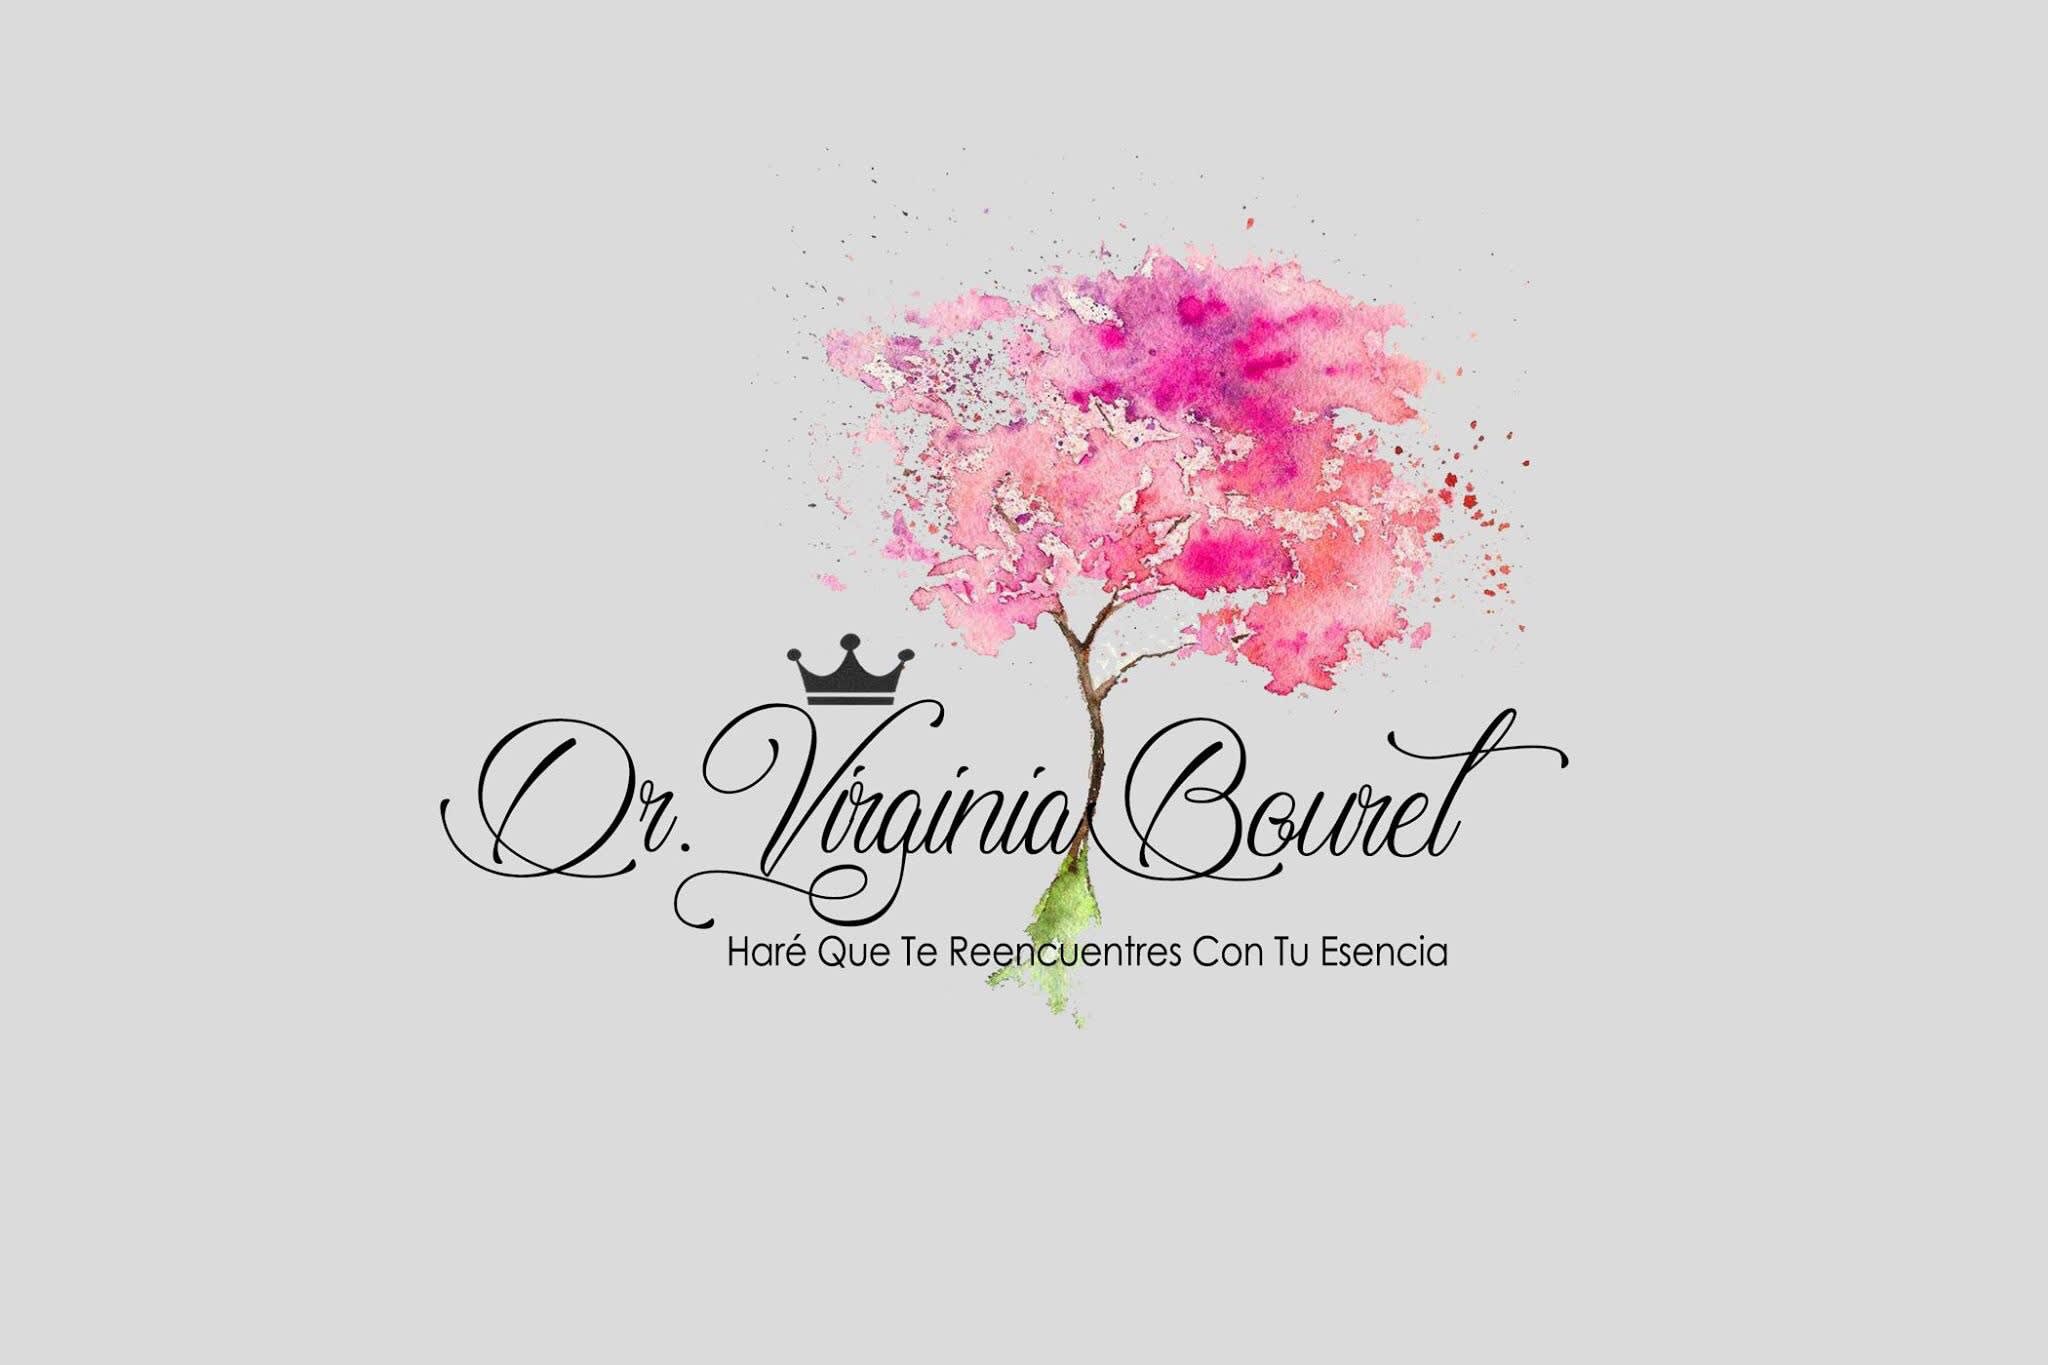 Dr. Virginia Bouret